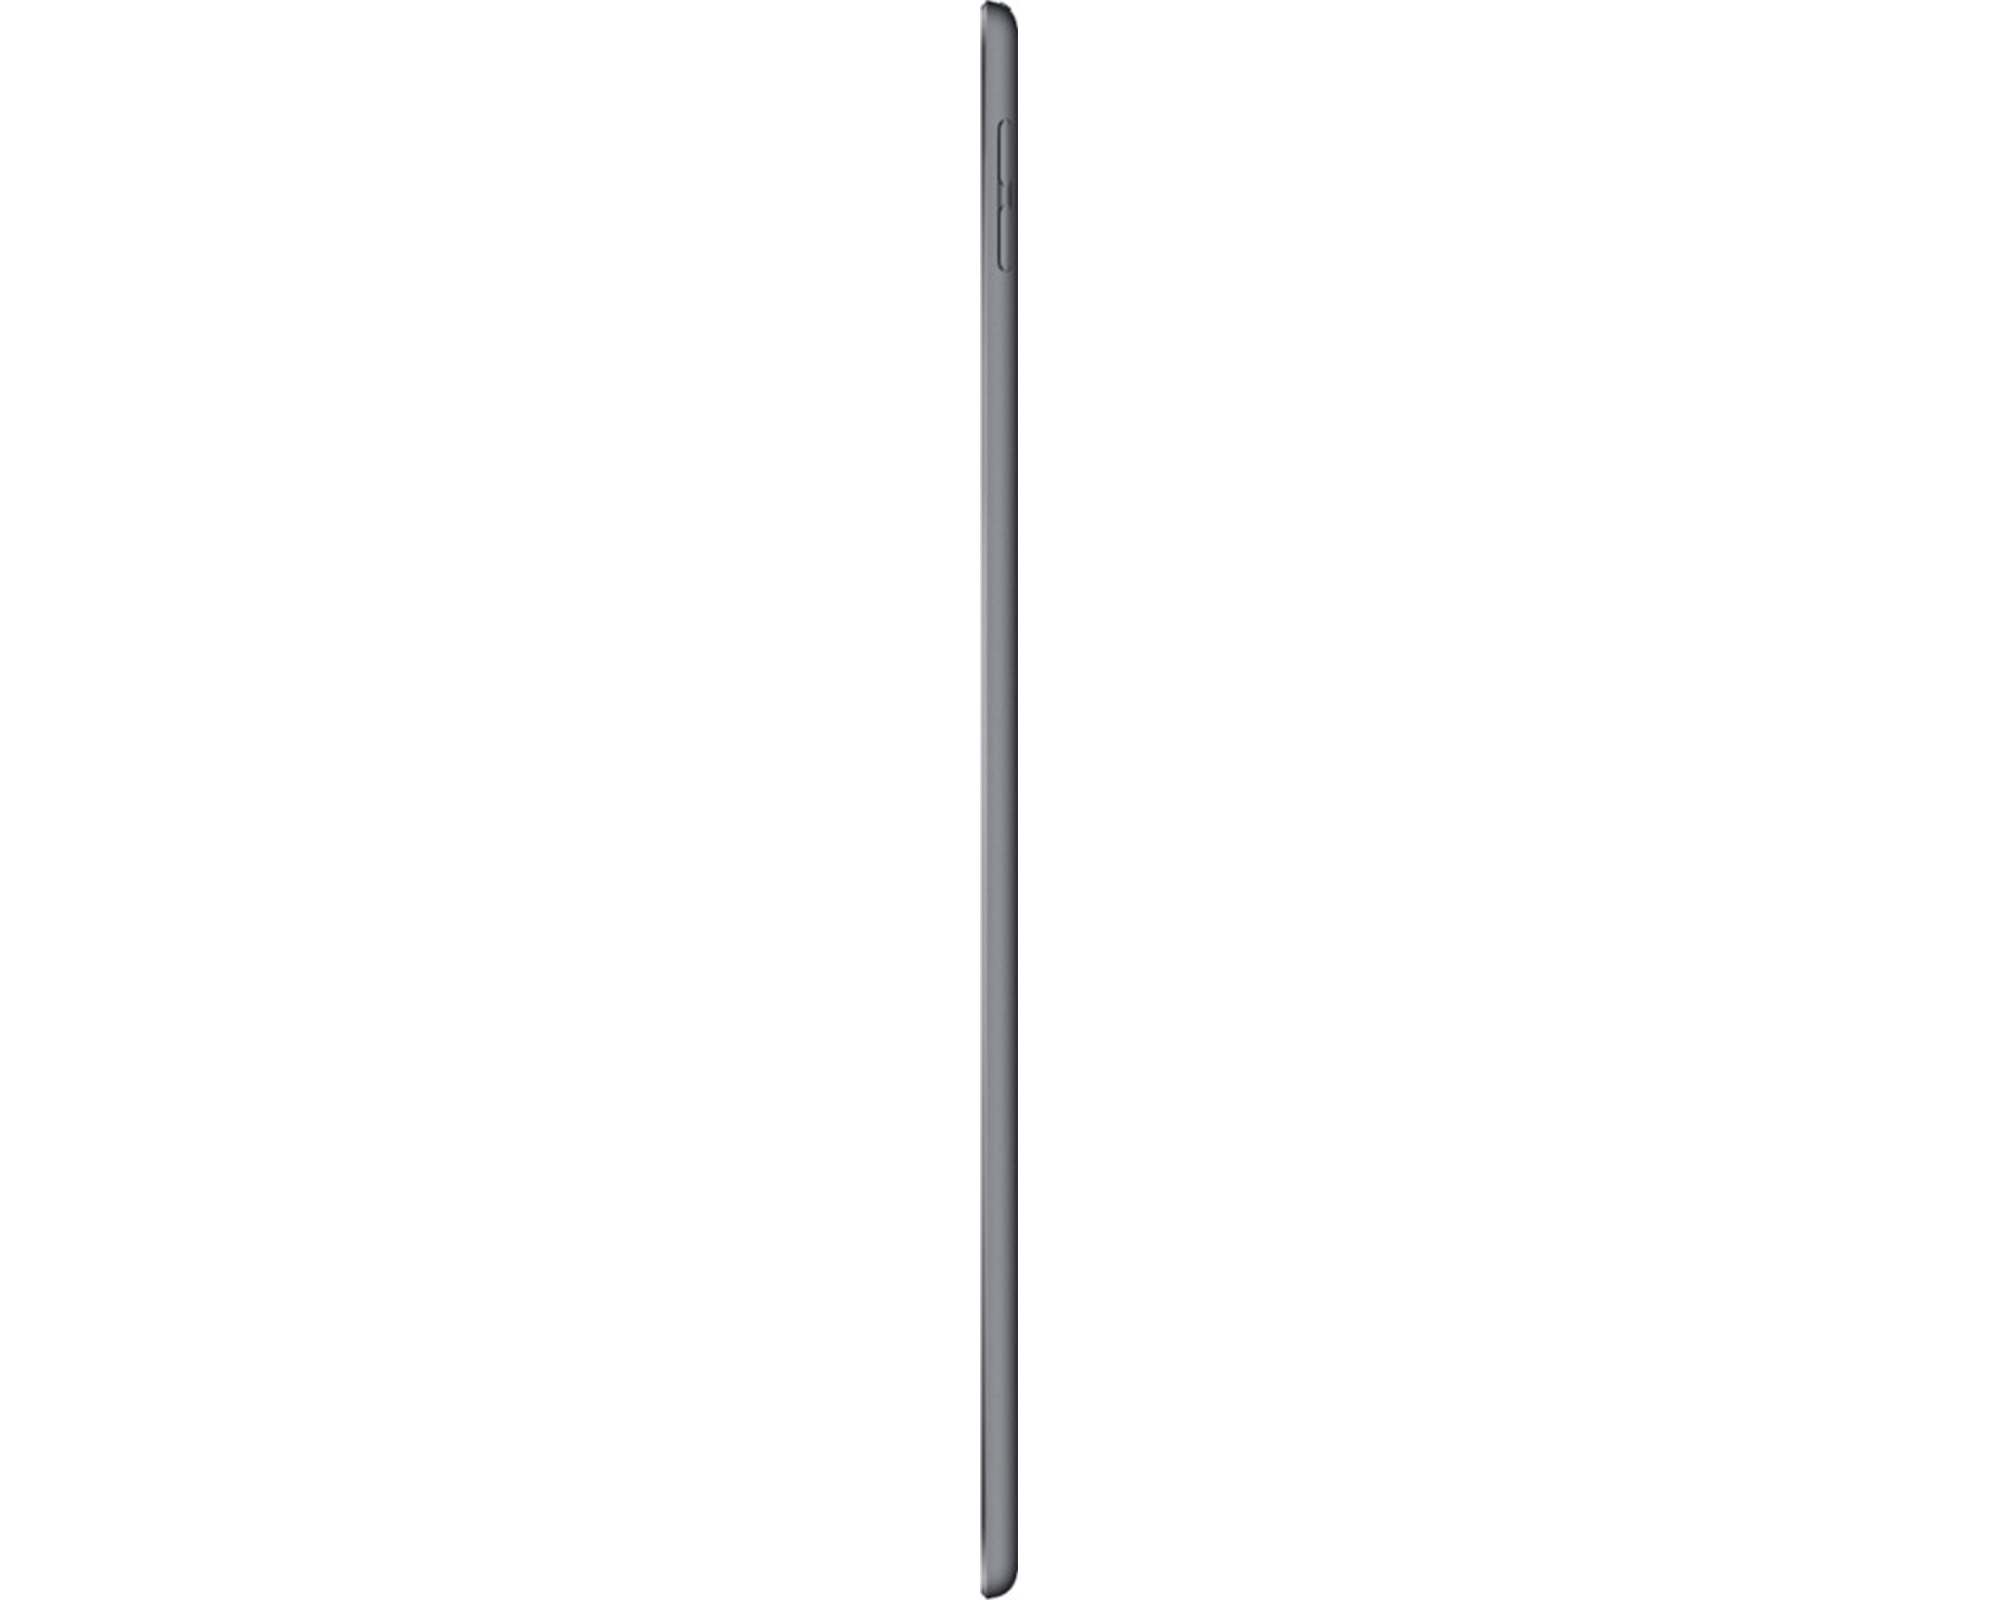 Restored Apple iPad Air 2 A1566 Wi-Fi (MGL12LL/A ) Space Gray - 16GB, 9.7 (Refurbished) - image 5 of 5